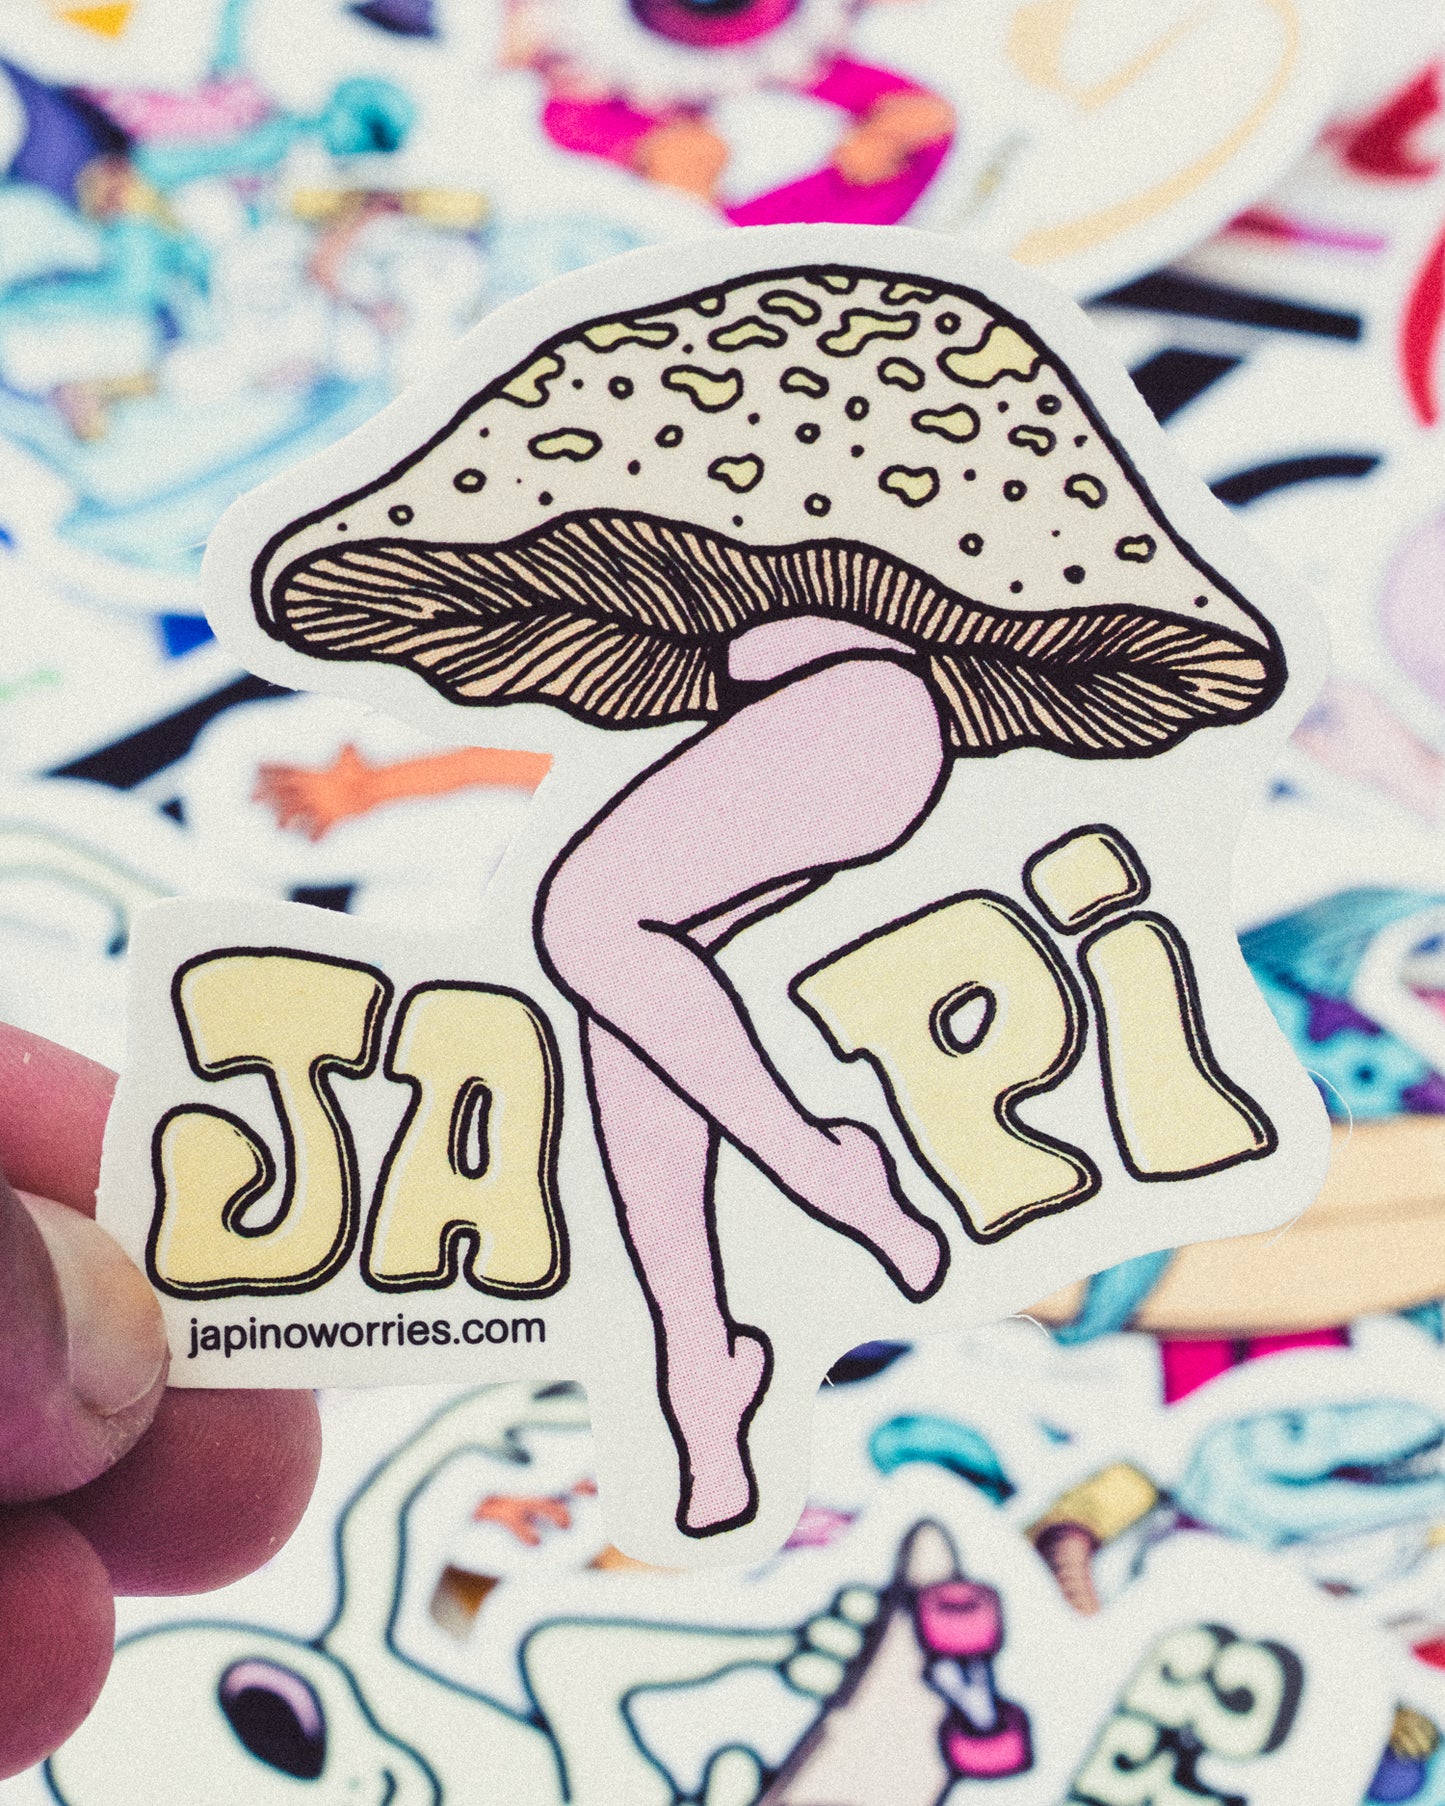 Moonage Daydream Sticker / Japi Creatures